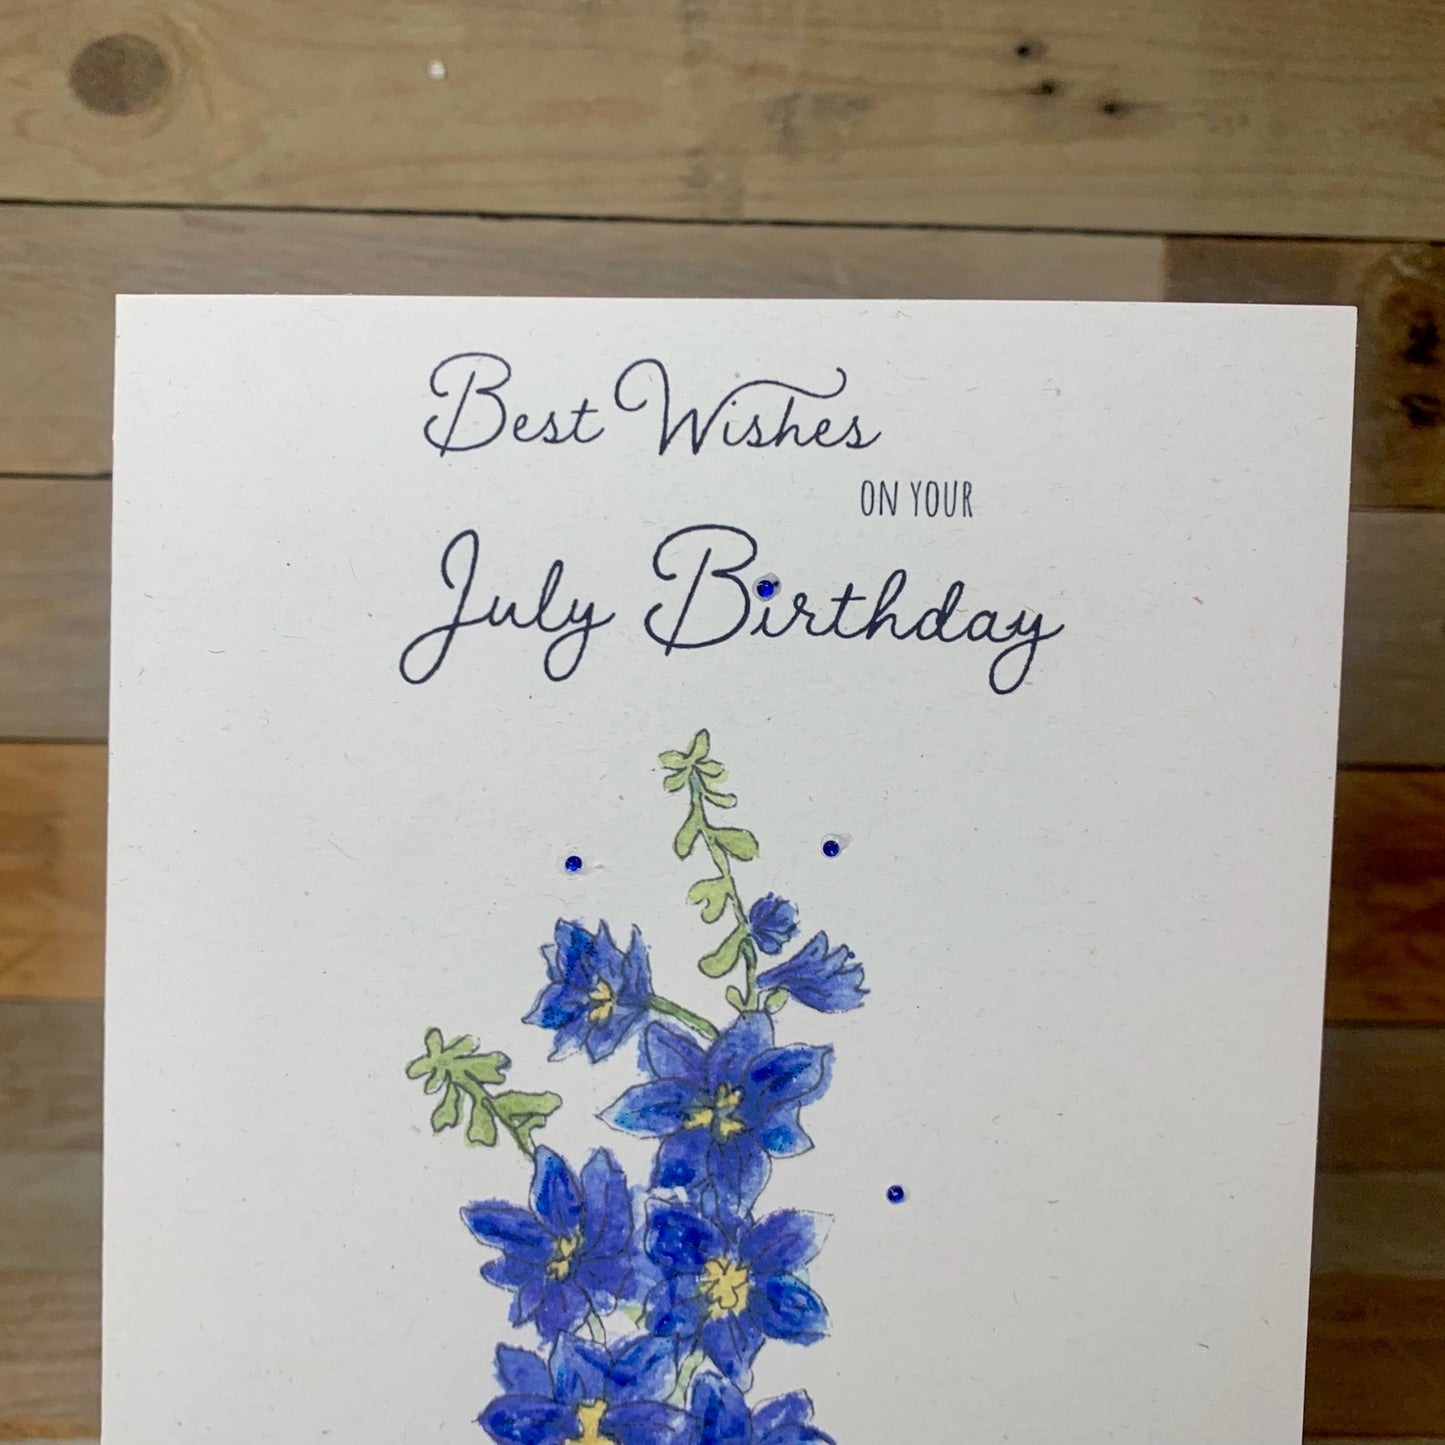 July / Delphinium Birth Flower card - Arty Bee Designs 